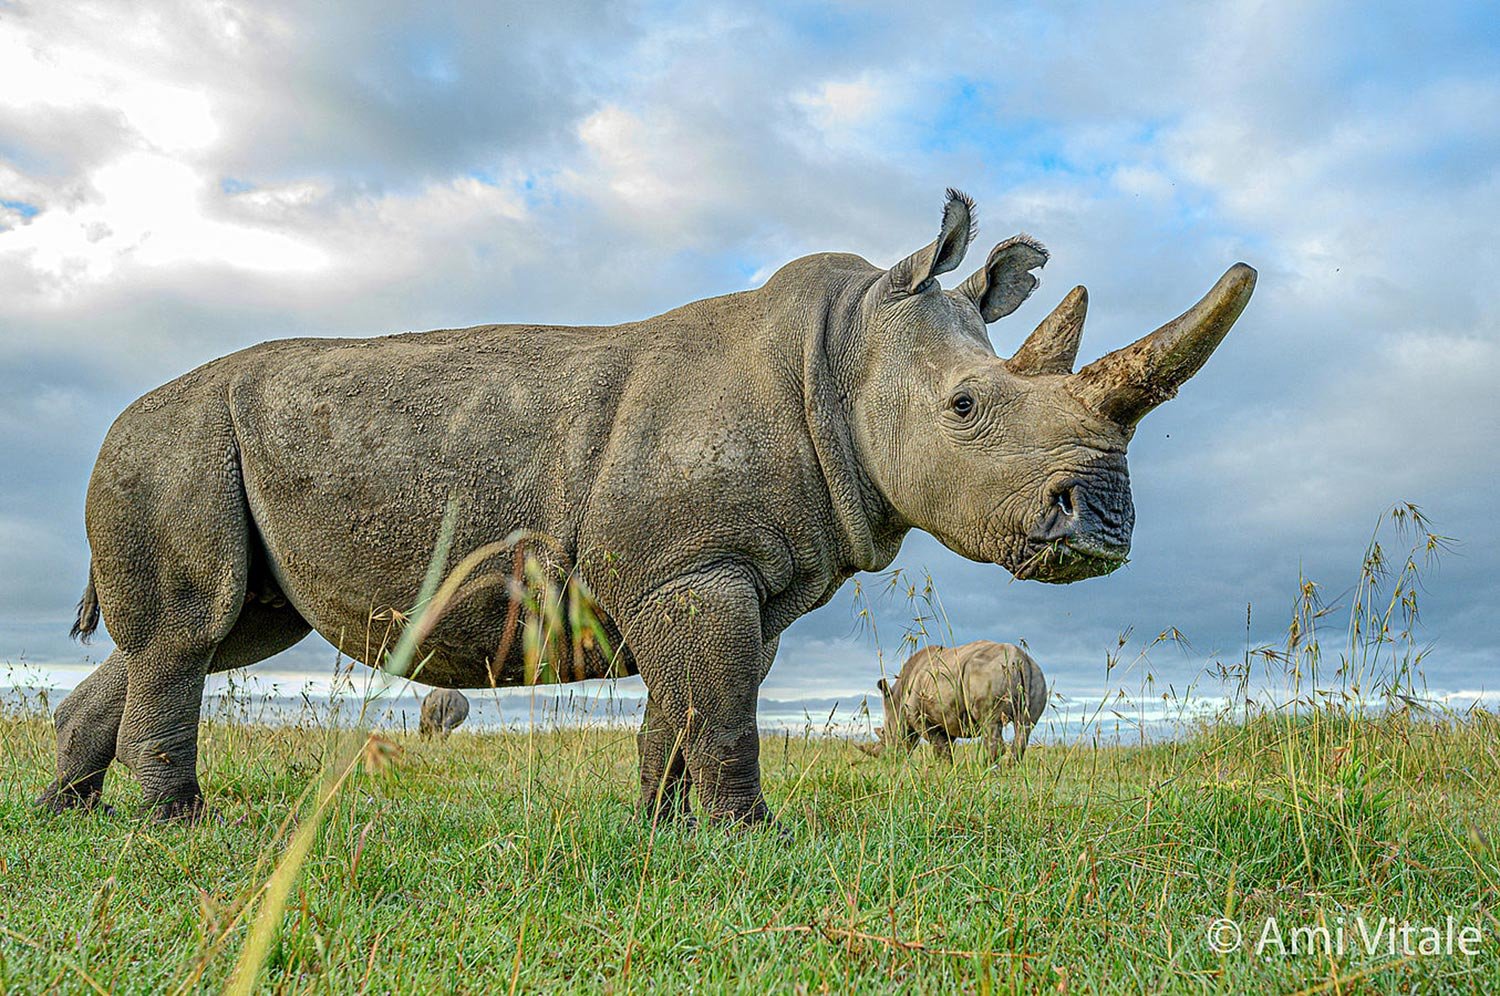 Saving the Northern White Rhino From Extinction